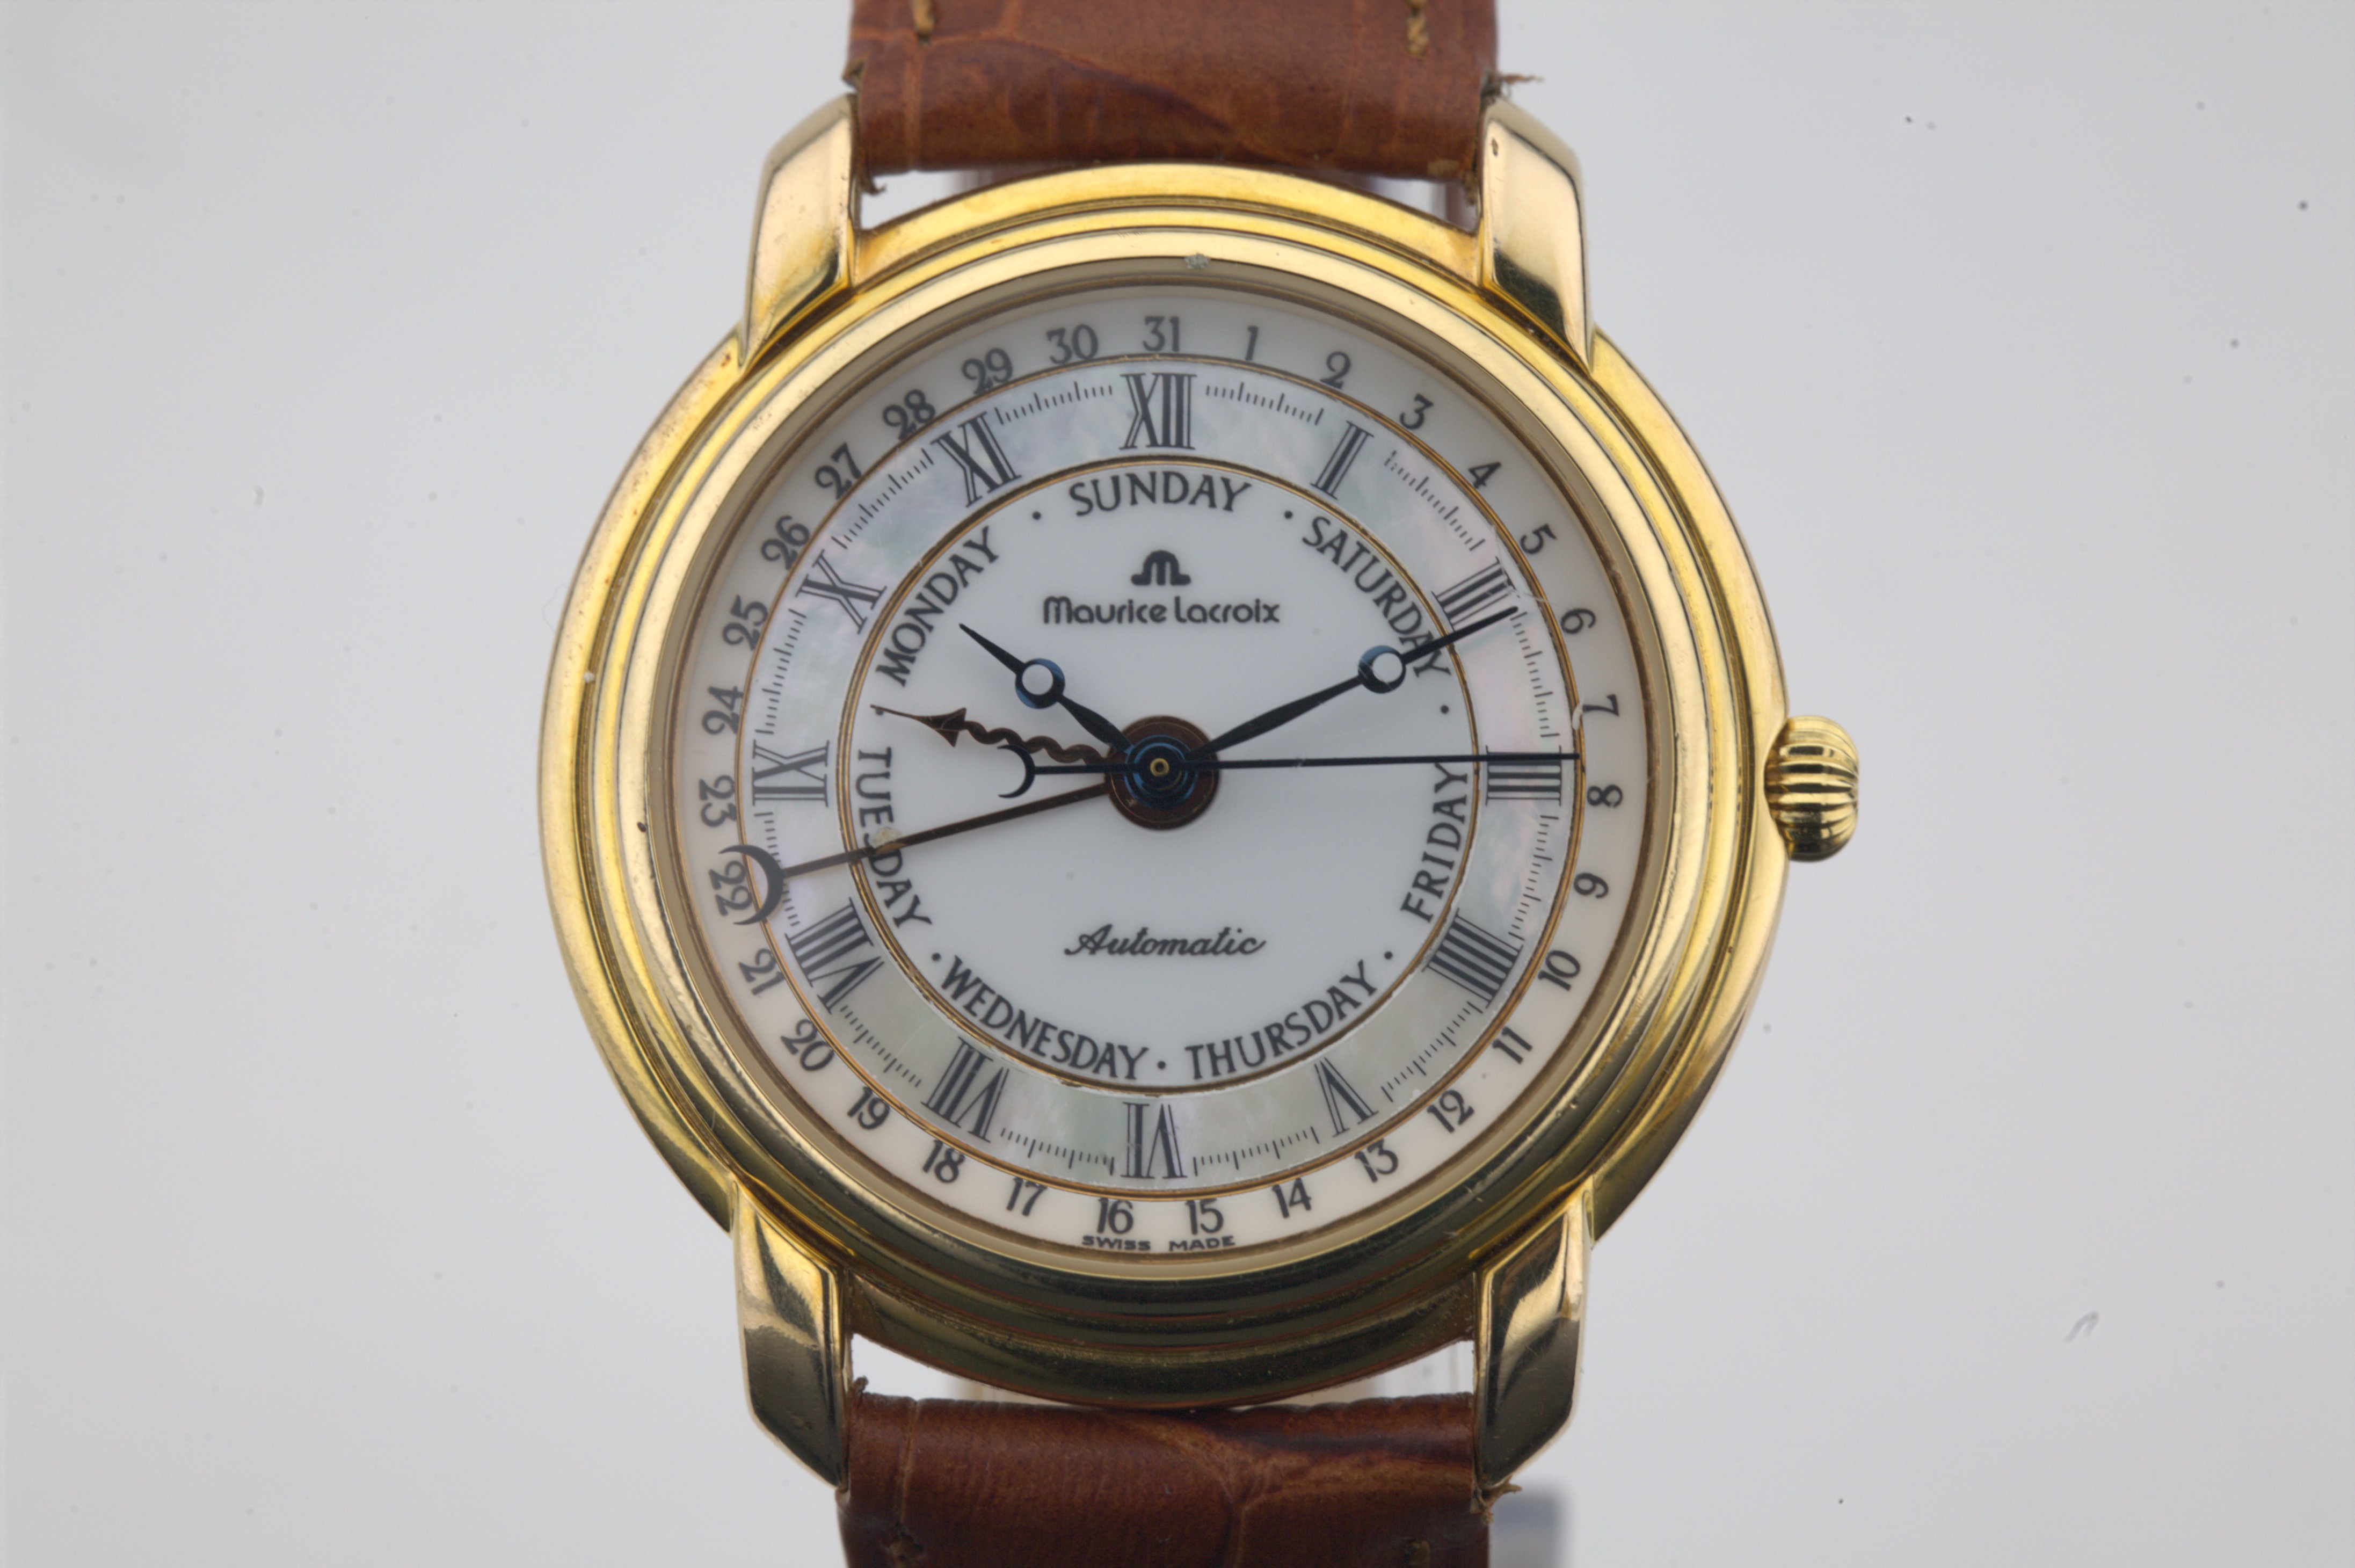 Maurice Lacroix / Masterpiece - Gentlemen's Gold/Steel Wrist Watch - Image 2 of 9